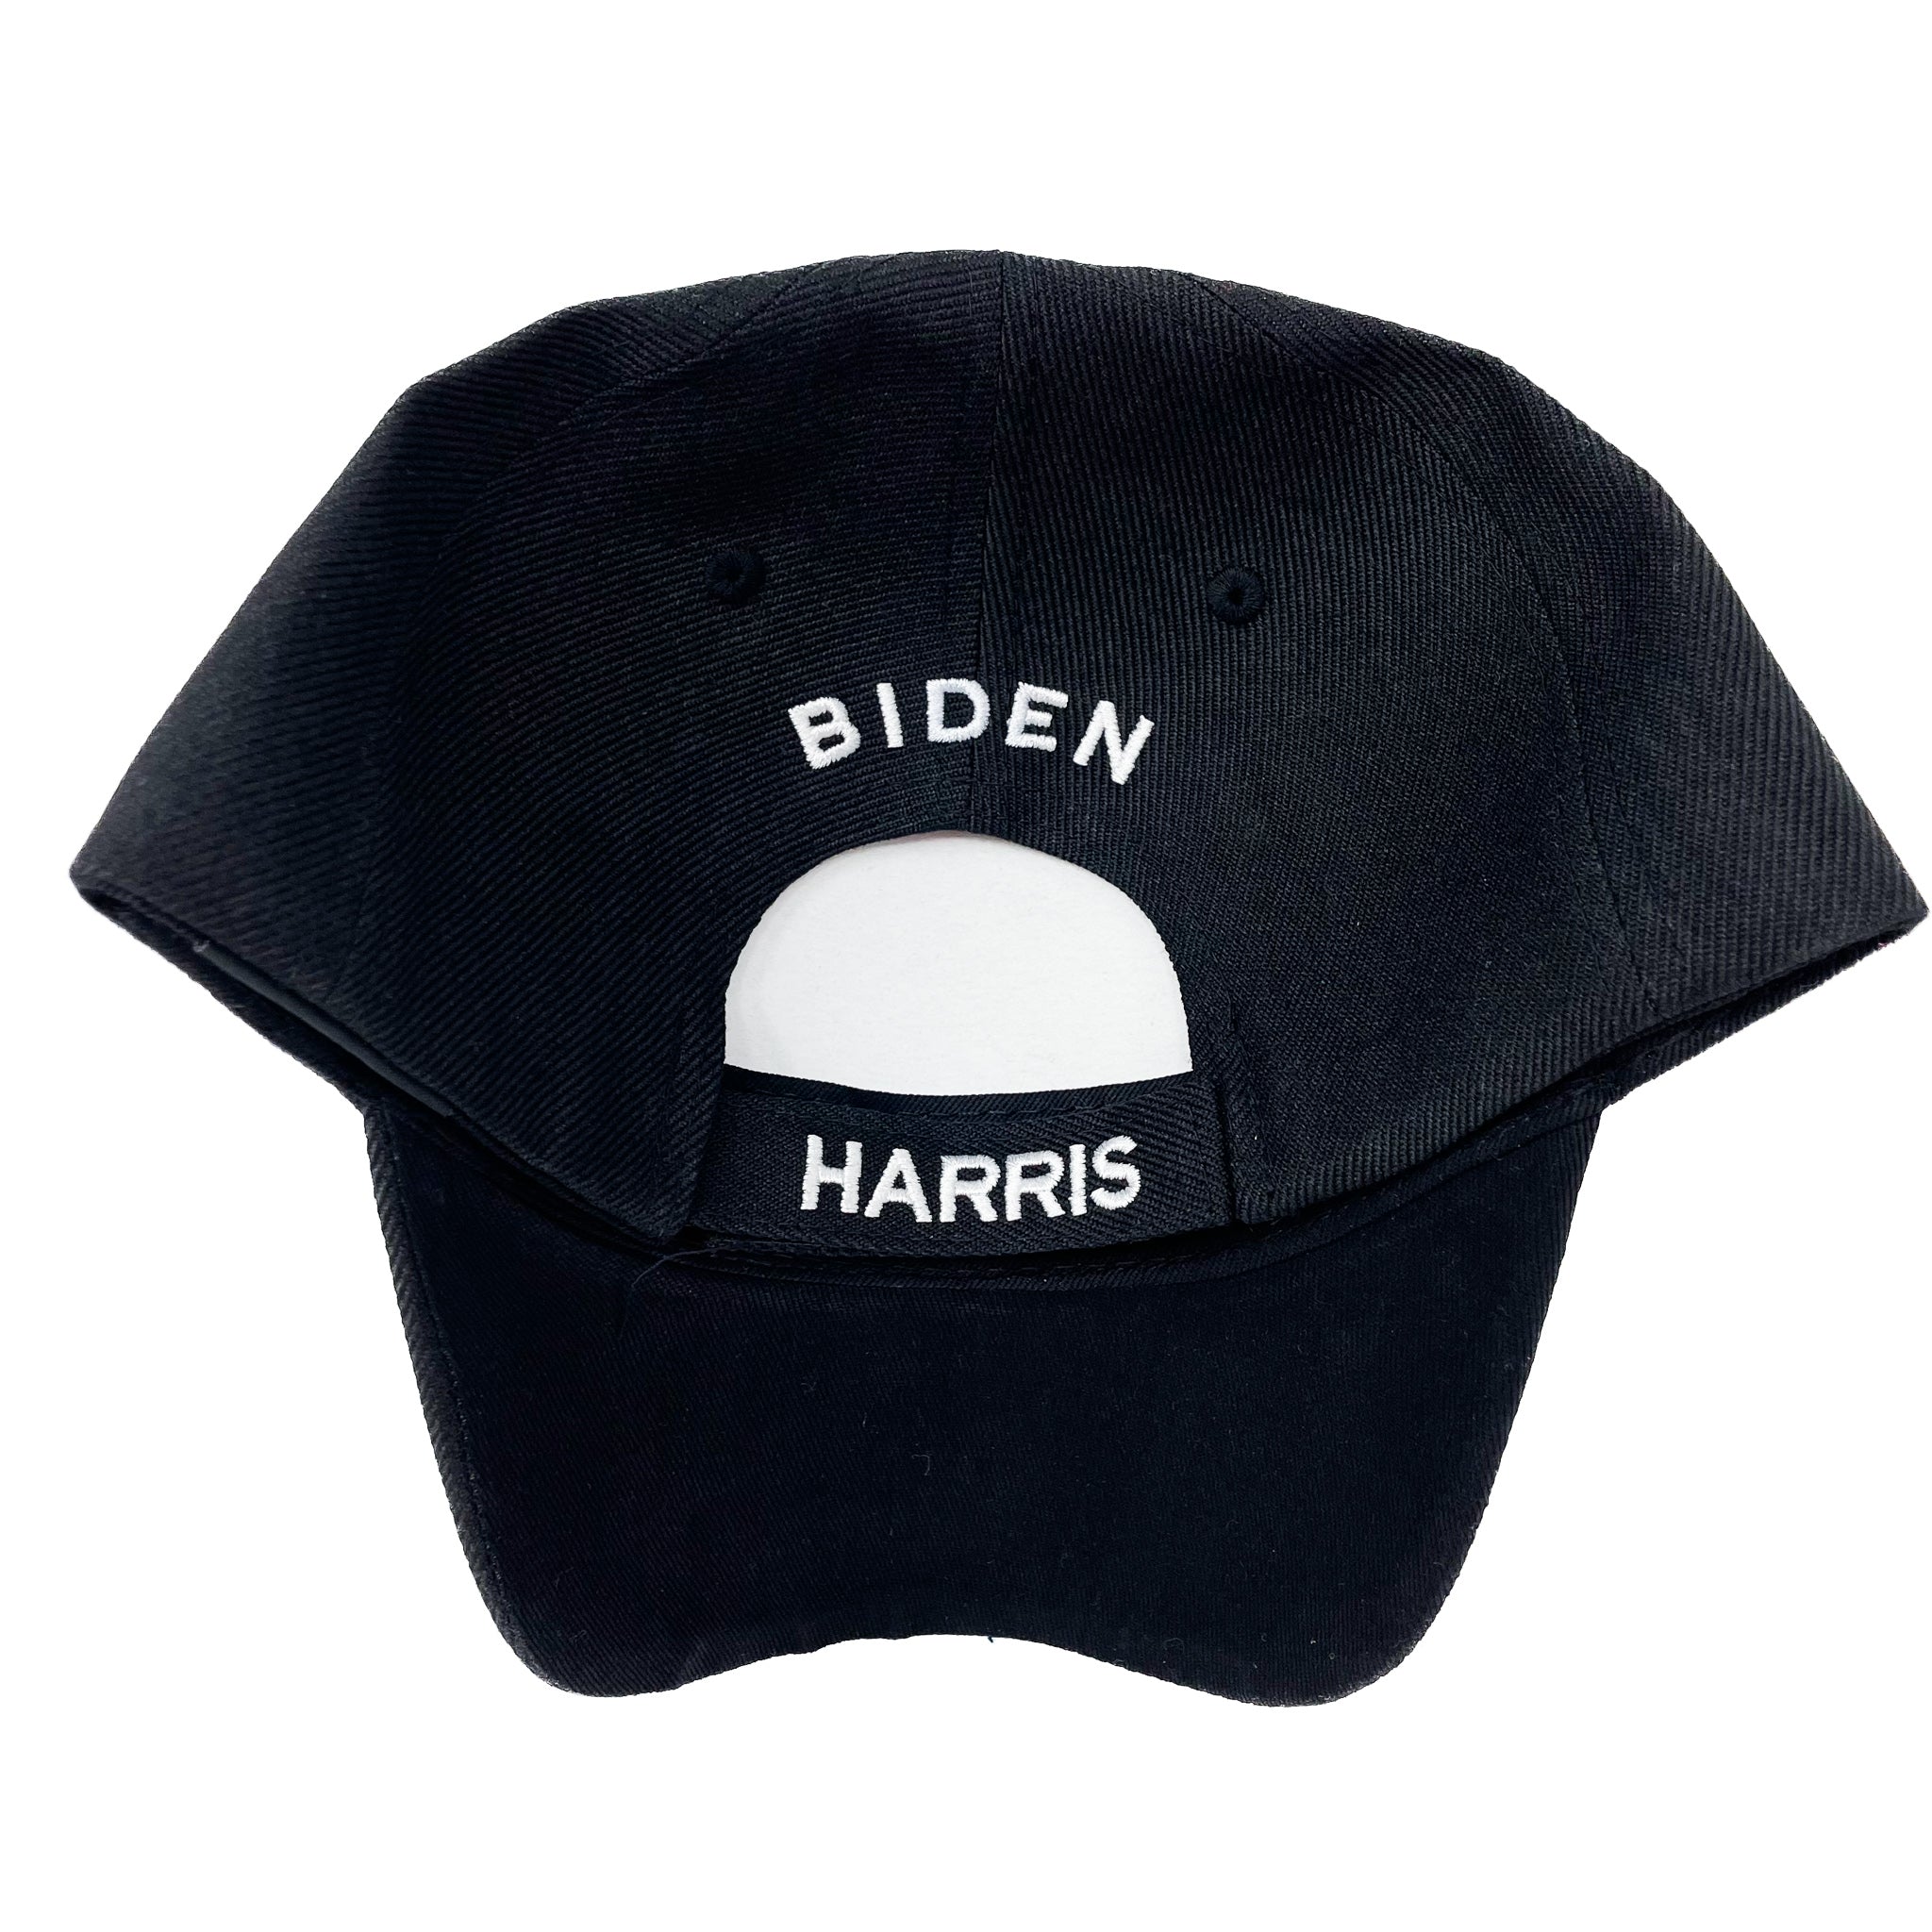 Biden Harris Cap (2 Colors)